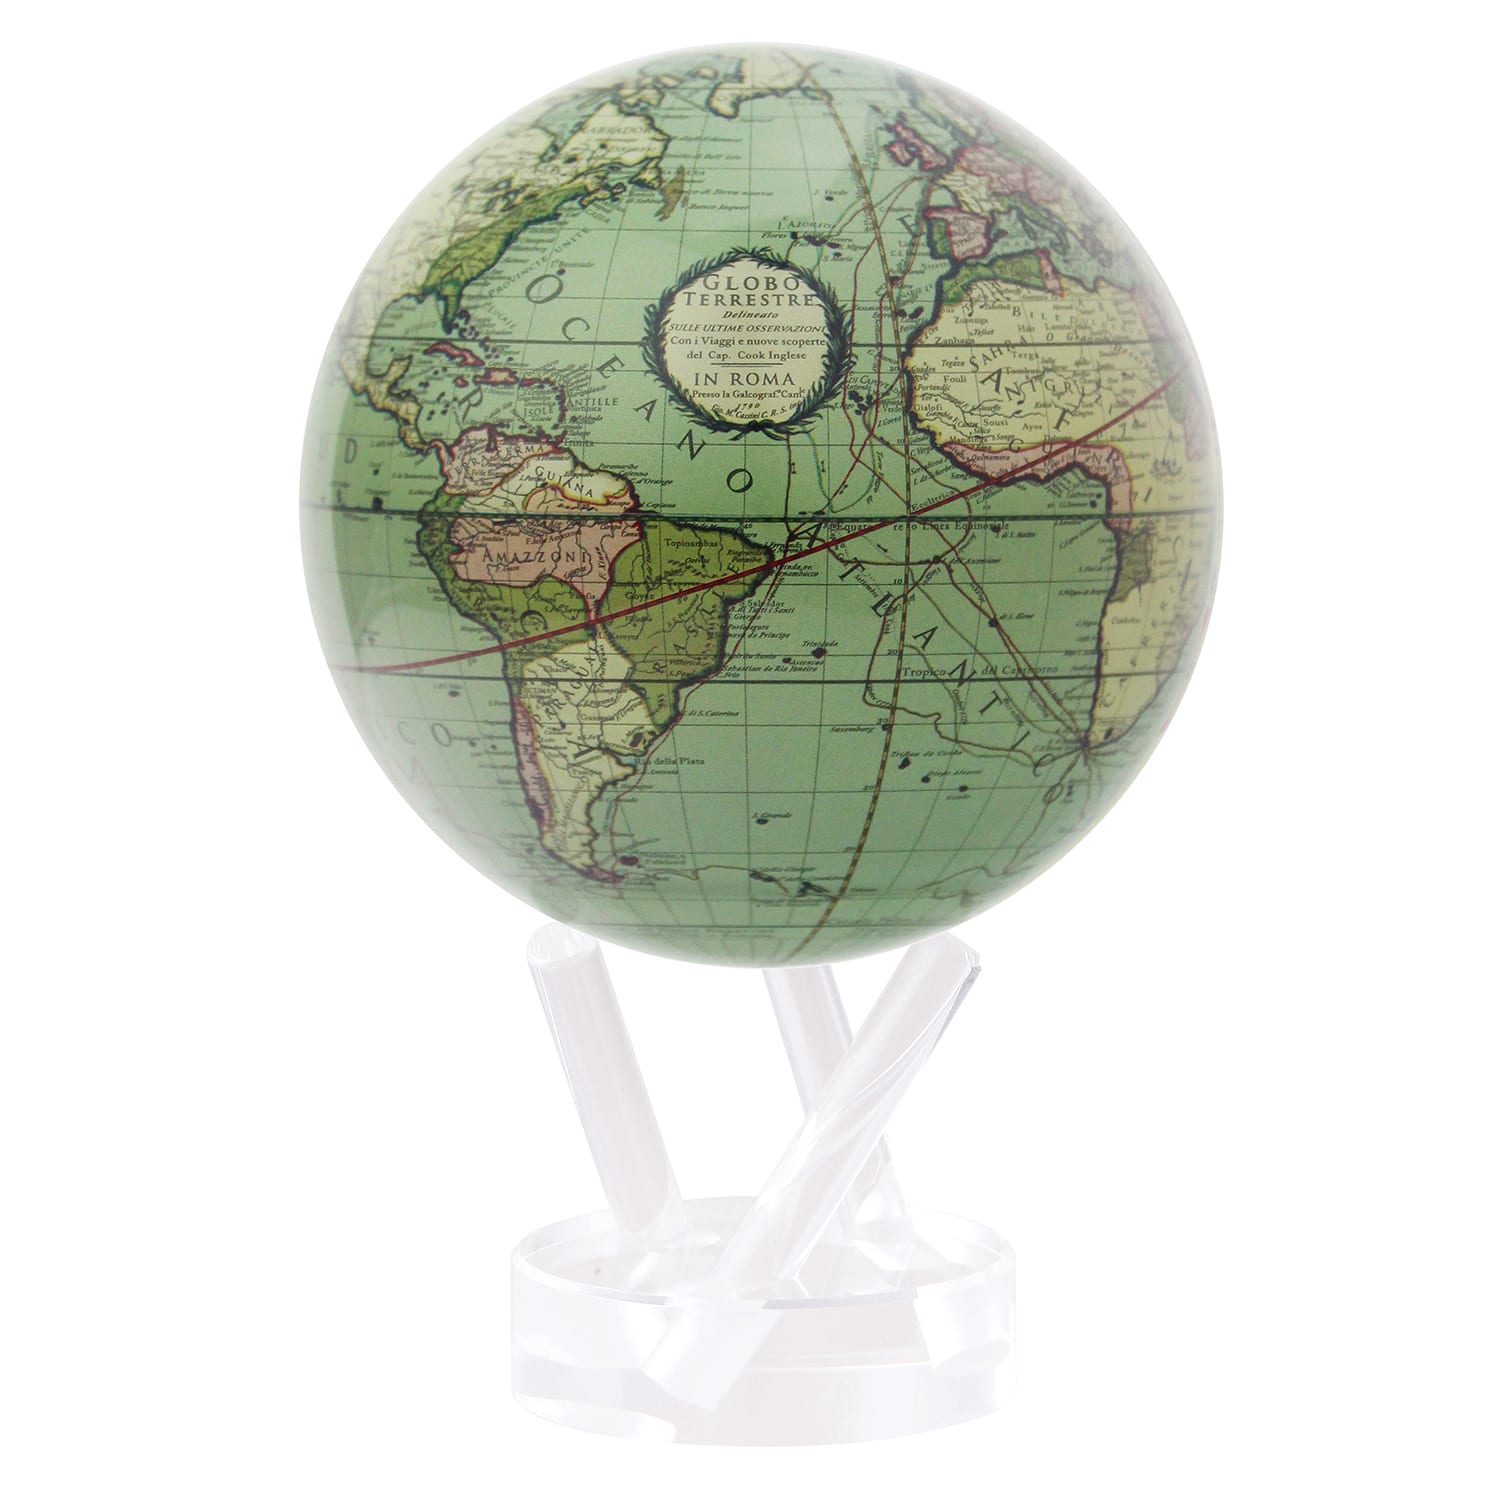 1 Pcs Mini Vintage Globe World Map English Edition Desktop Rotating Earth Globe 